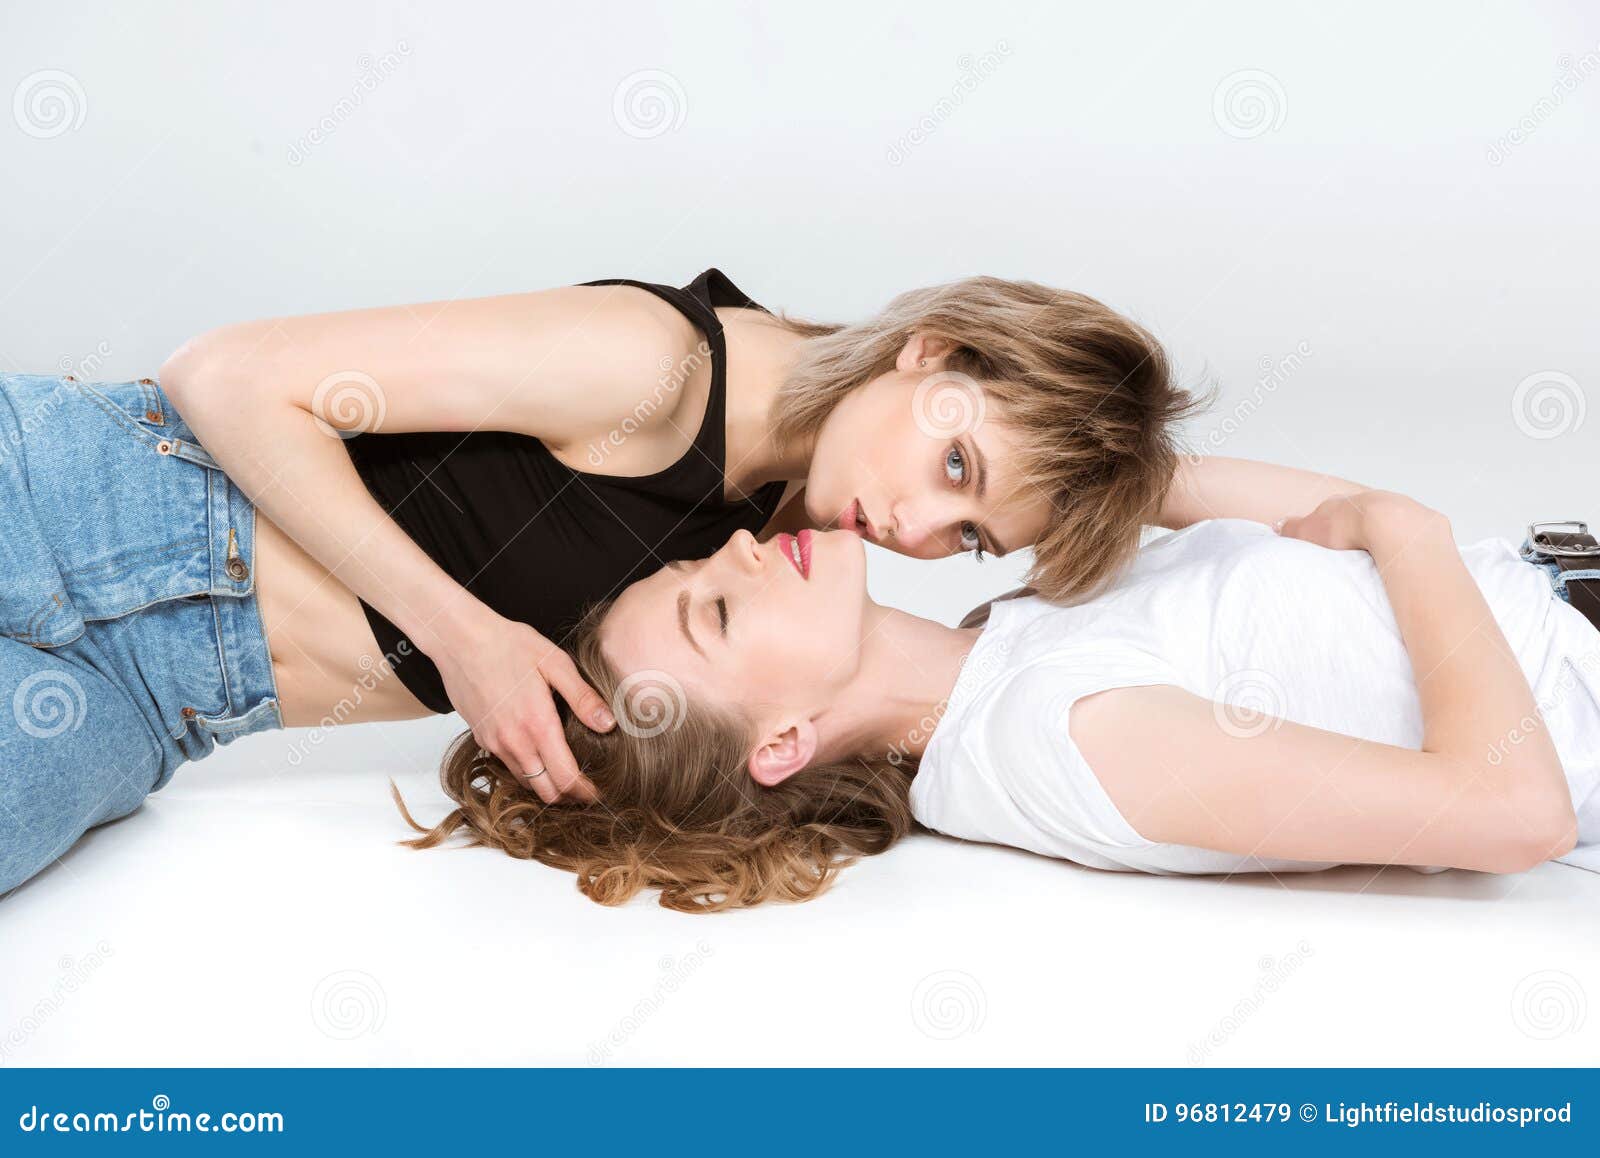 Lesbian sleep seduction